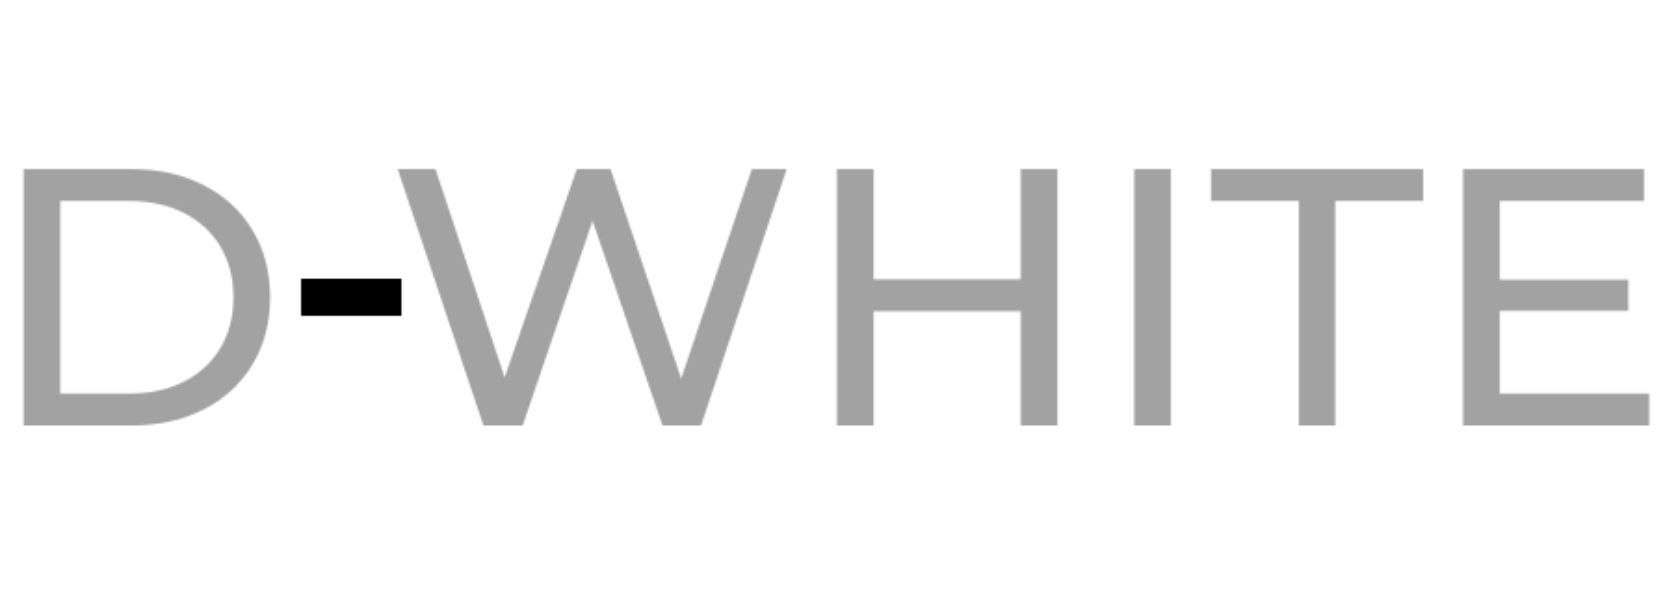 Logo de d-white maroc en para en ligne